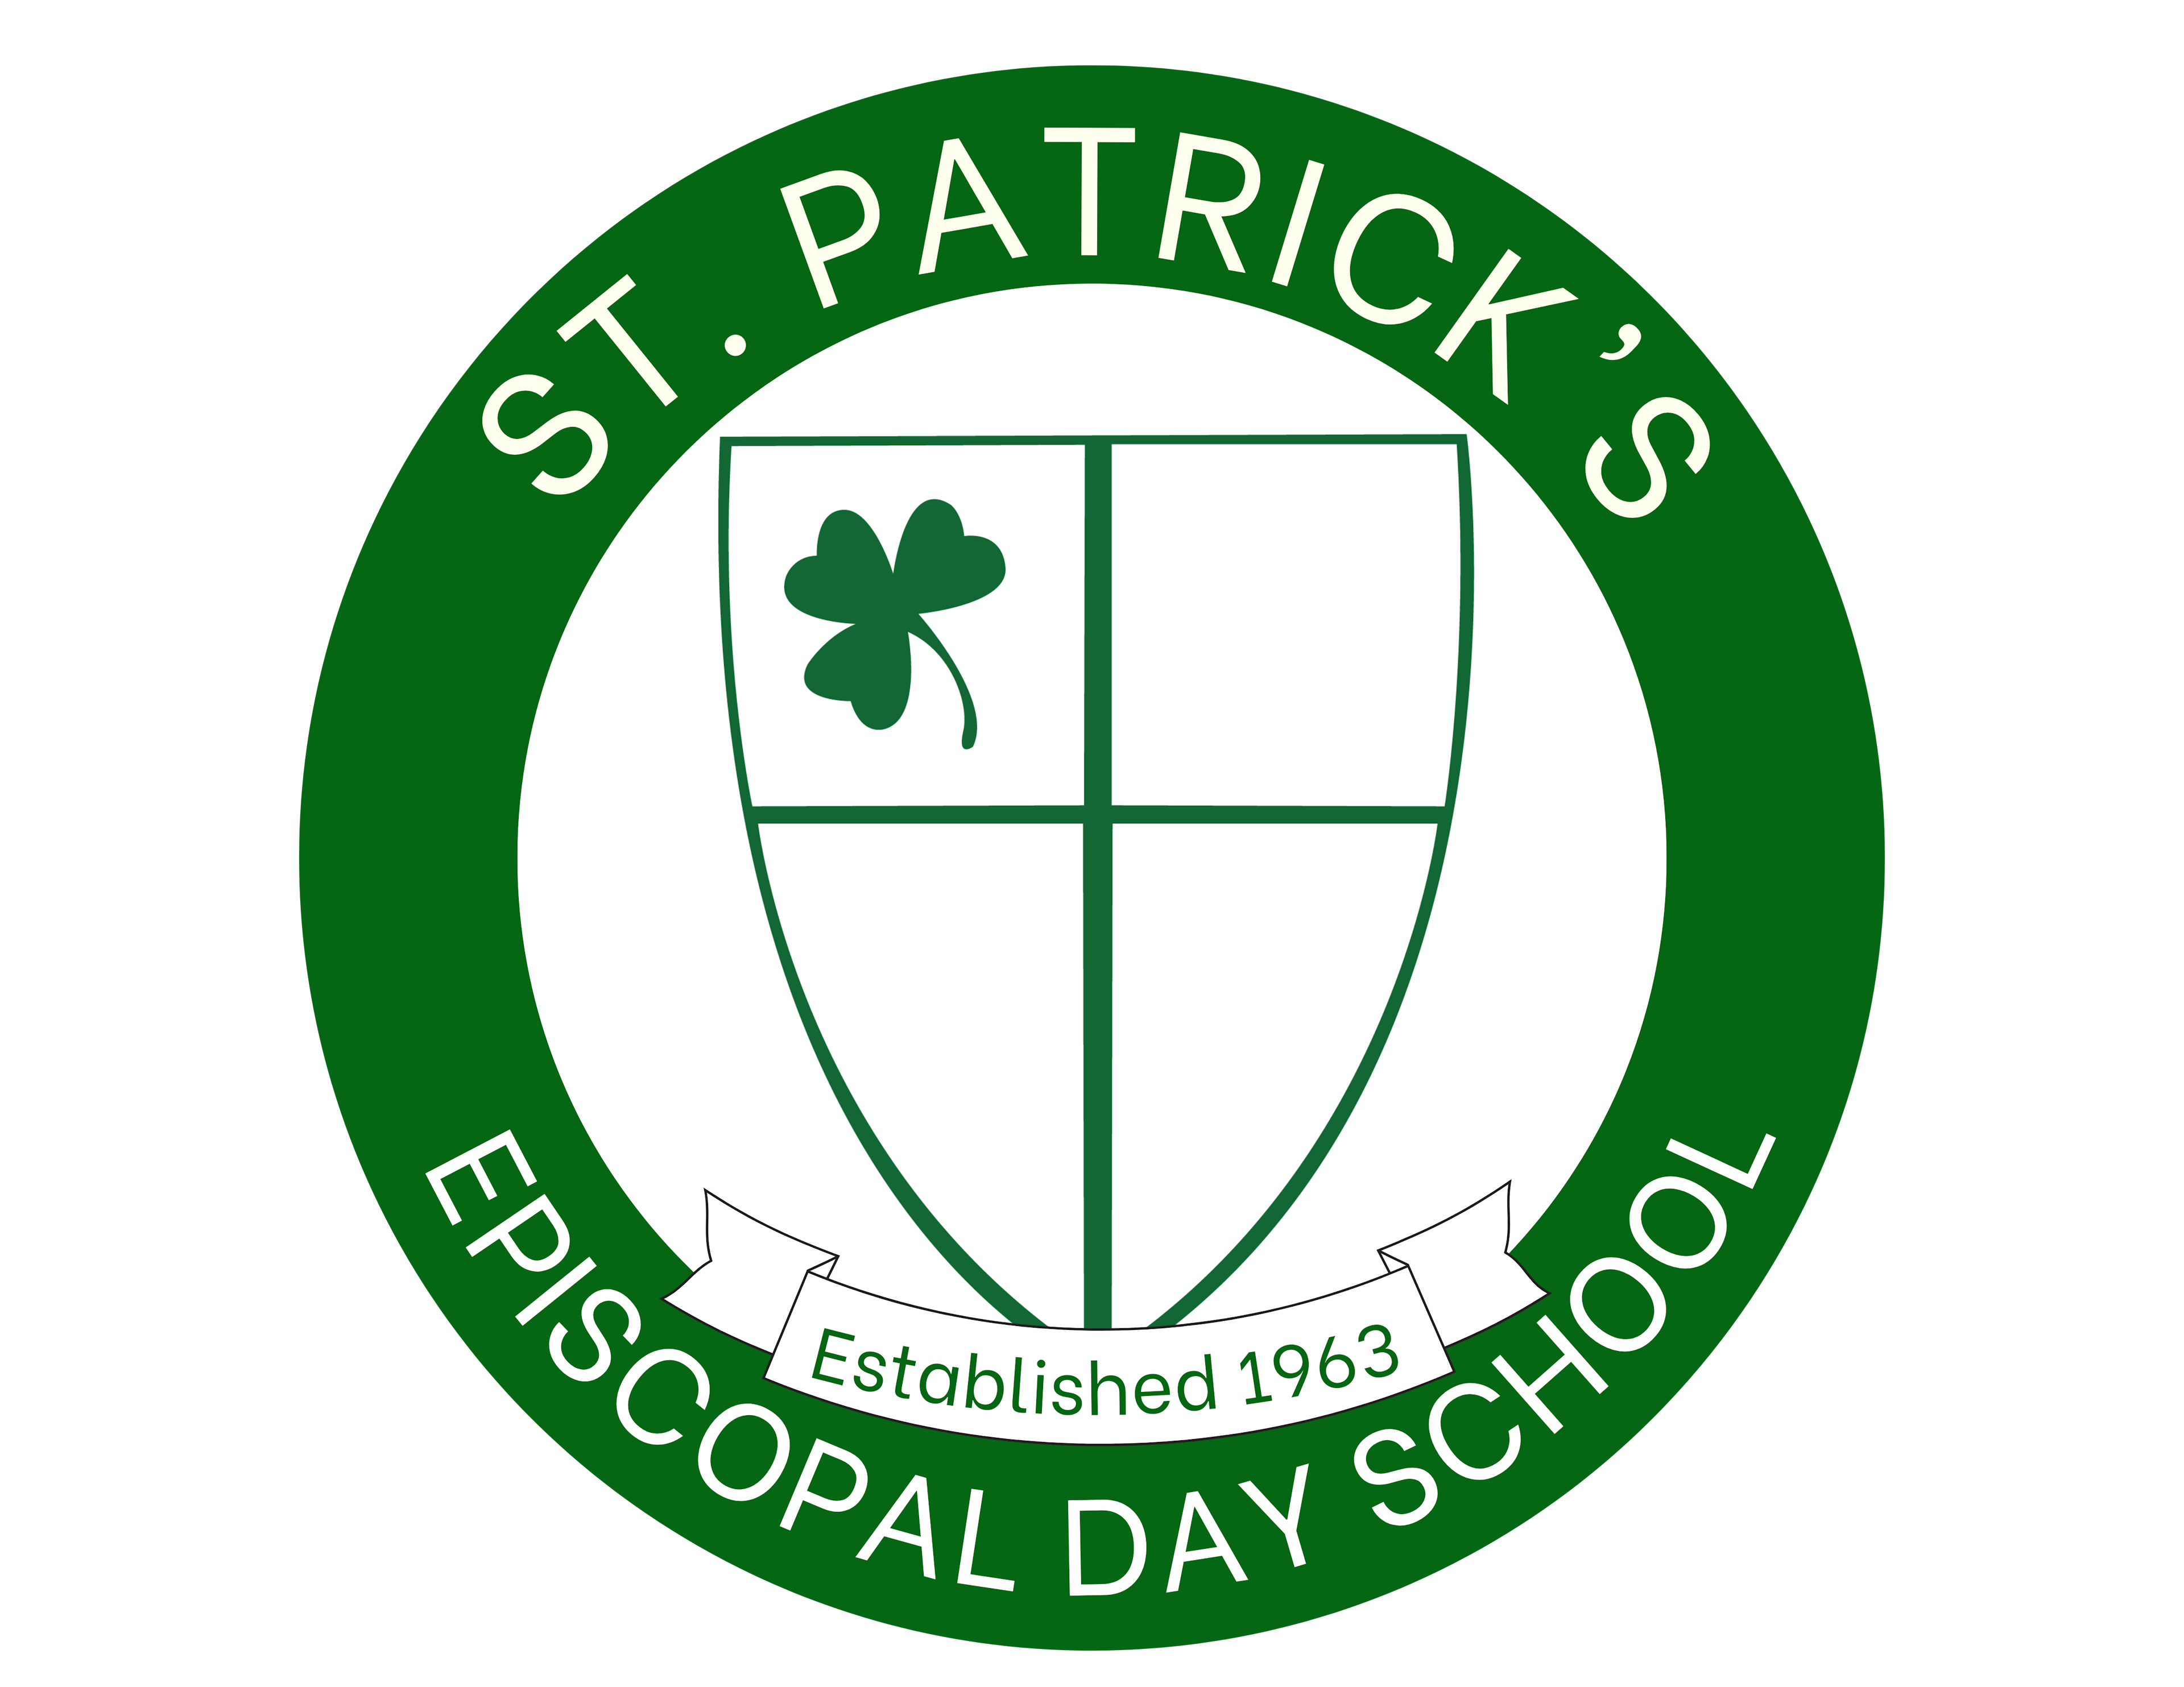 St. Patrick's Episcopal Day School logo